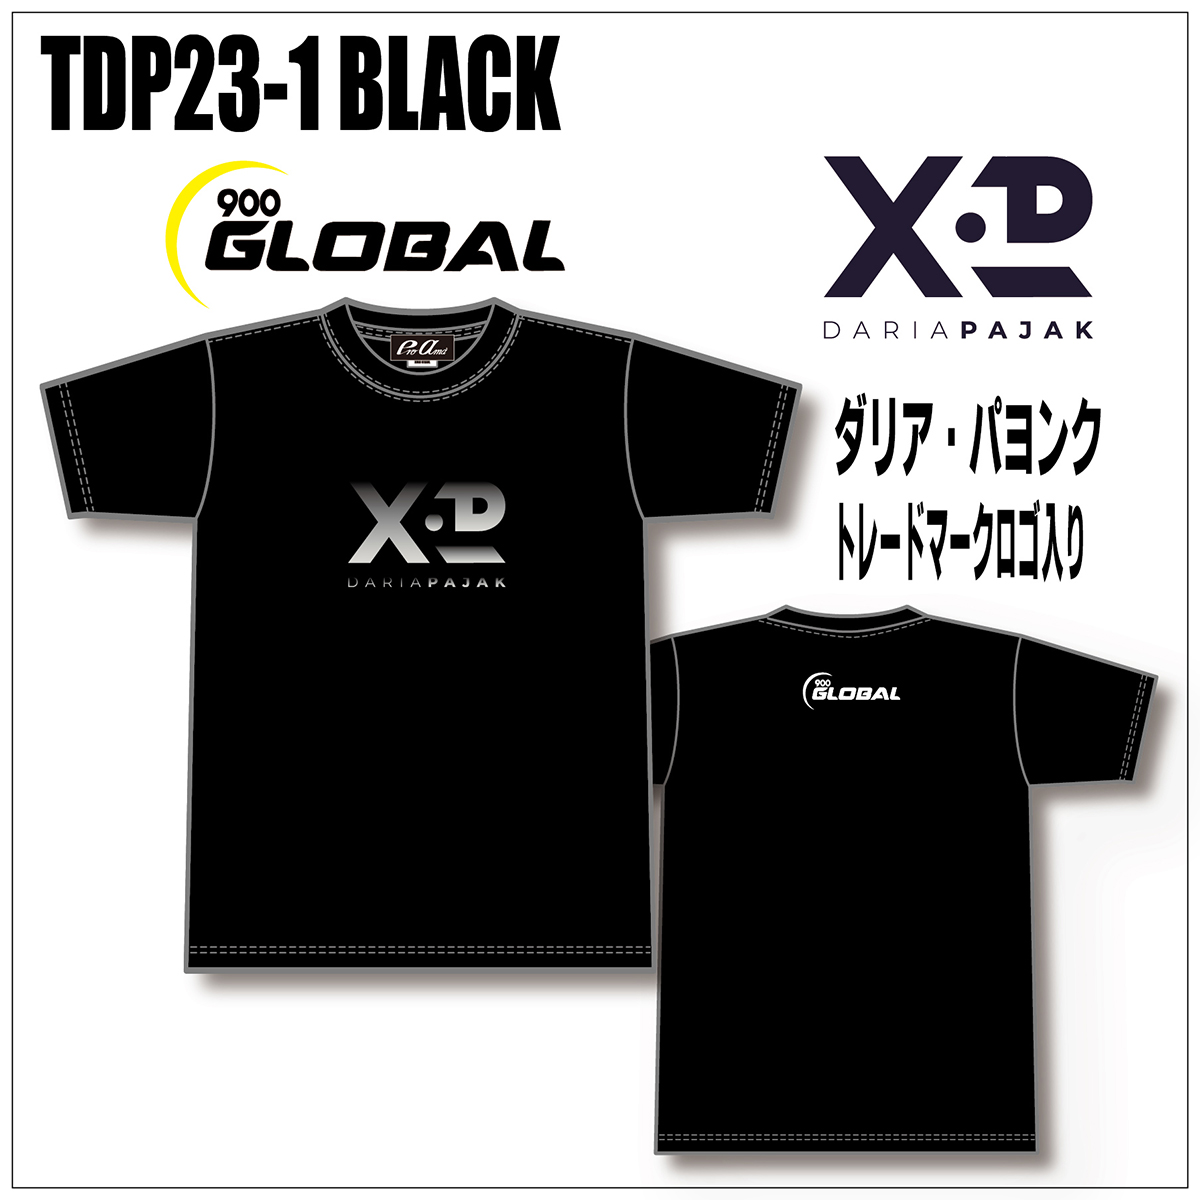 Tシャツ(TDP23-1 BLACK)